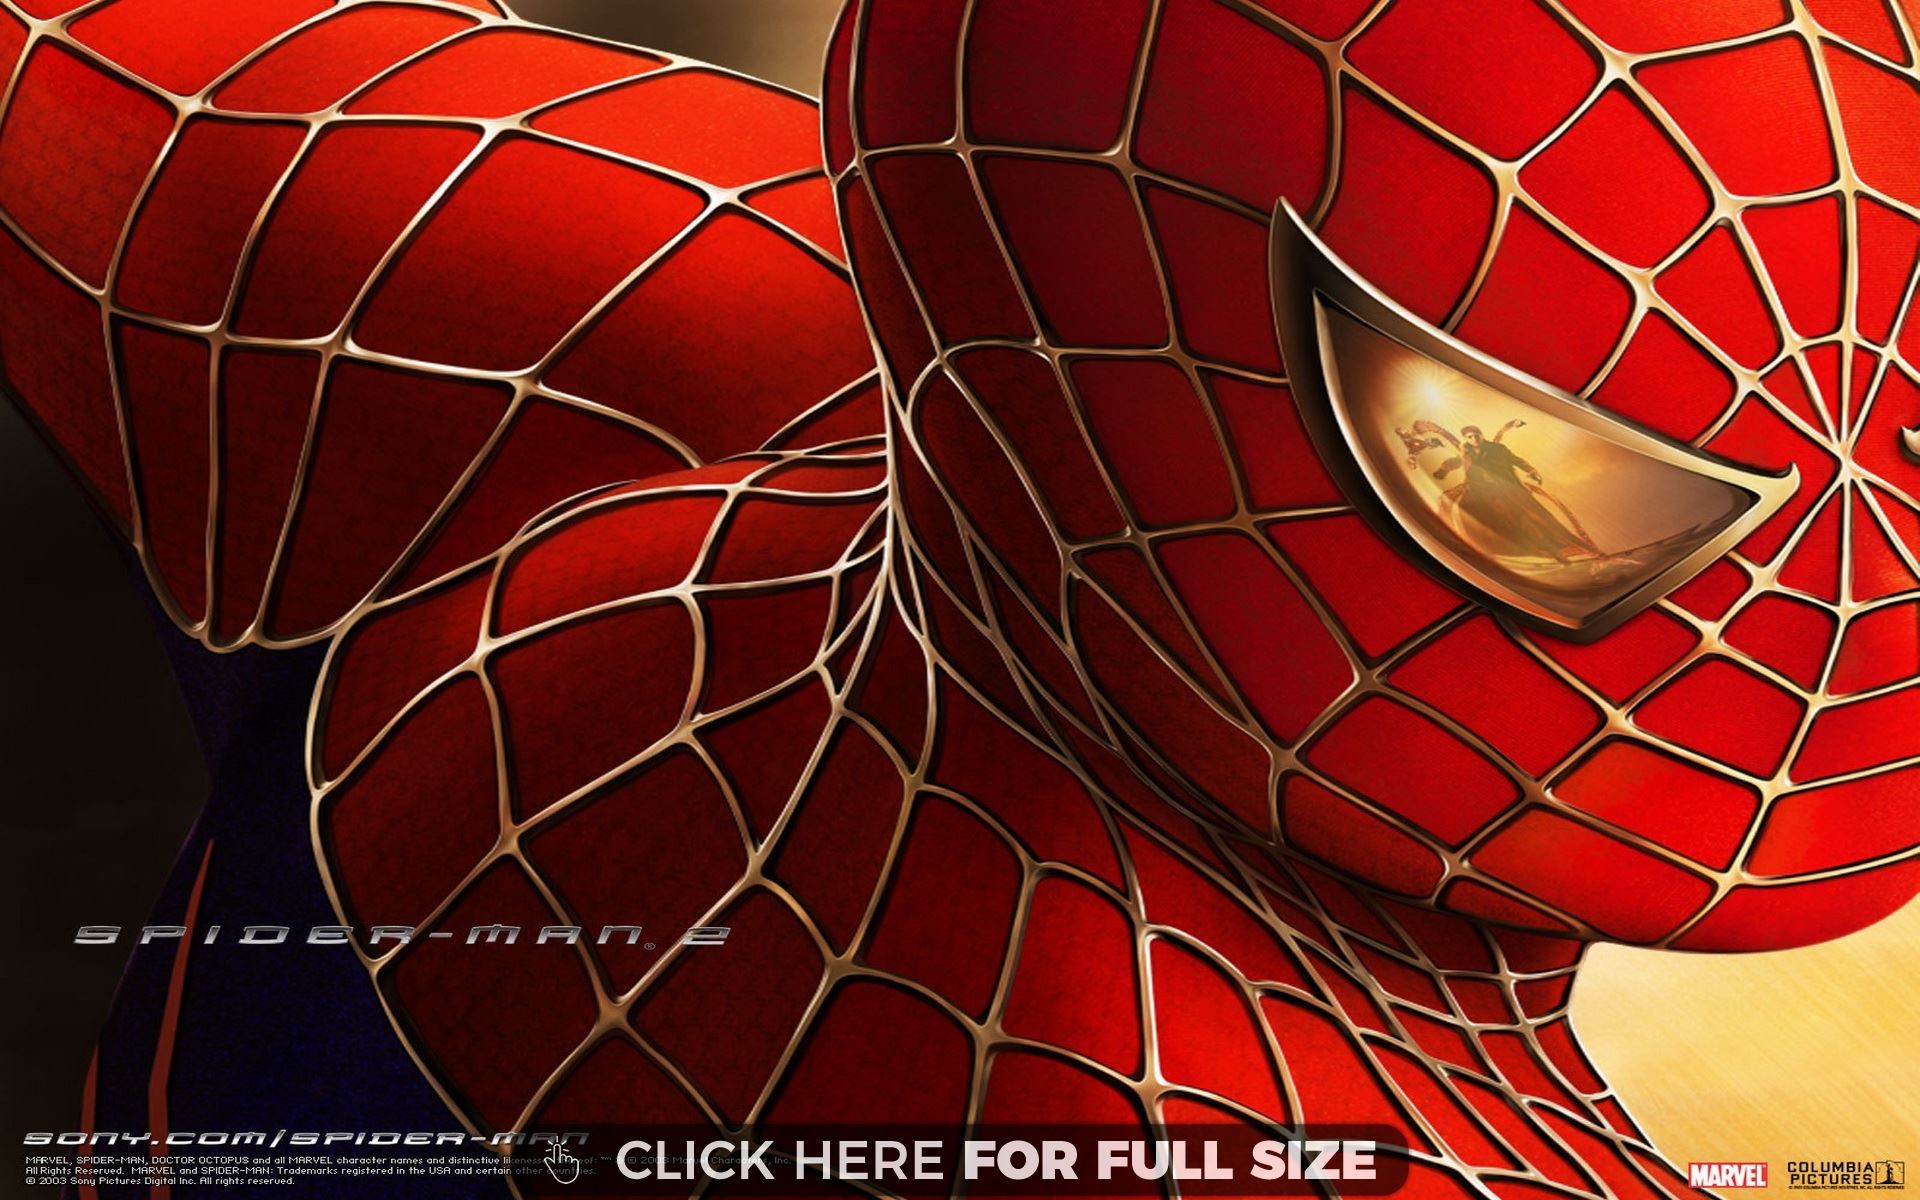 1920x1200 The Amazing SpiderMan D HD desktop wallpaper : High Definition 1024Ã768 HD  Amazing Spider Man 2 Wallpapers (44 Wallpapers) | Adorable Wallpapers |  Pinterest ...